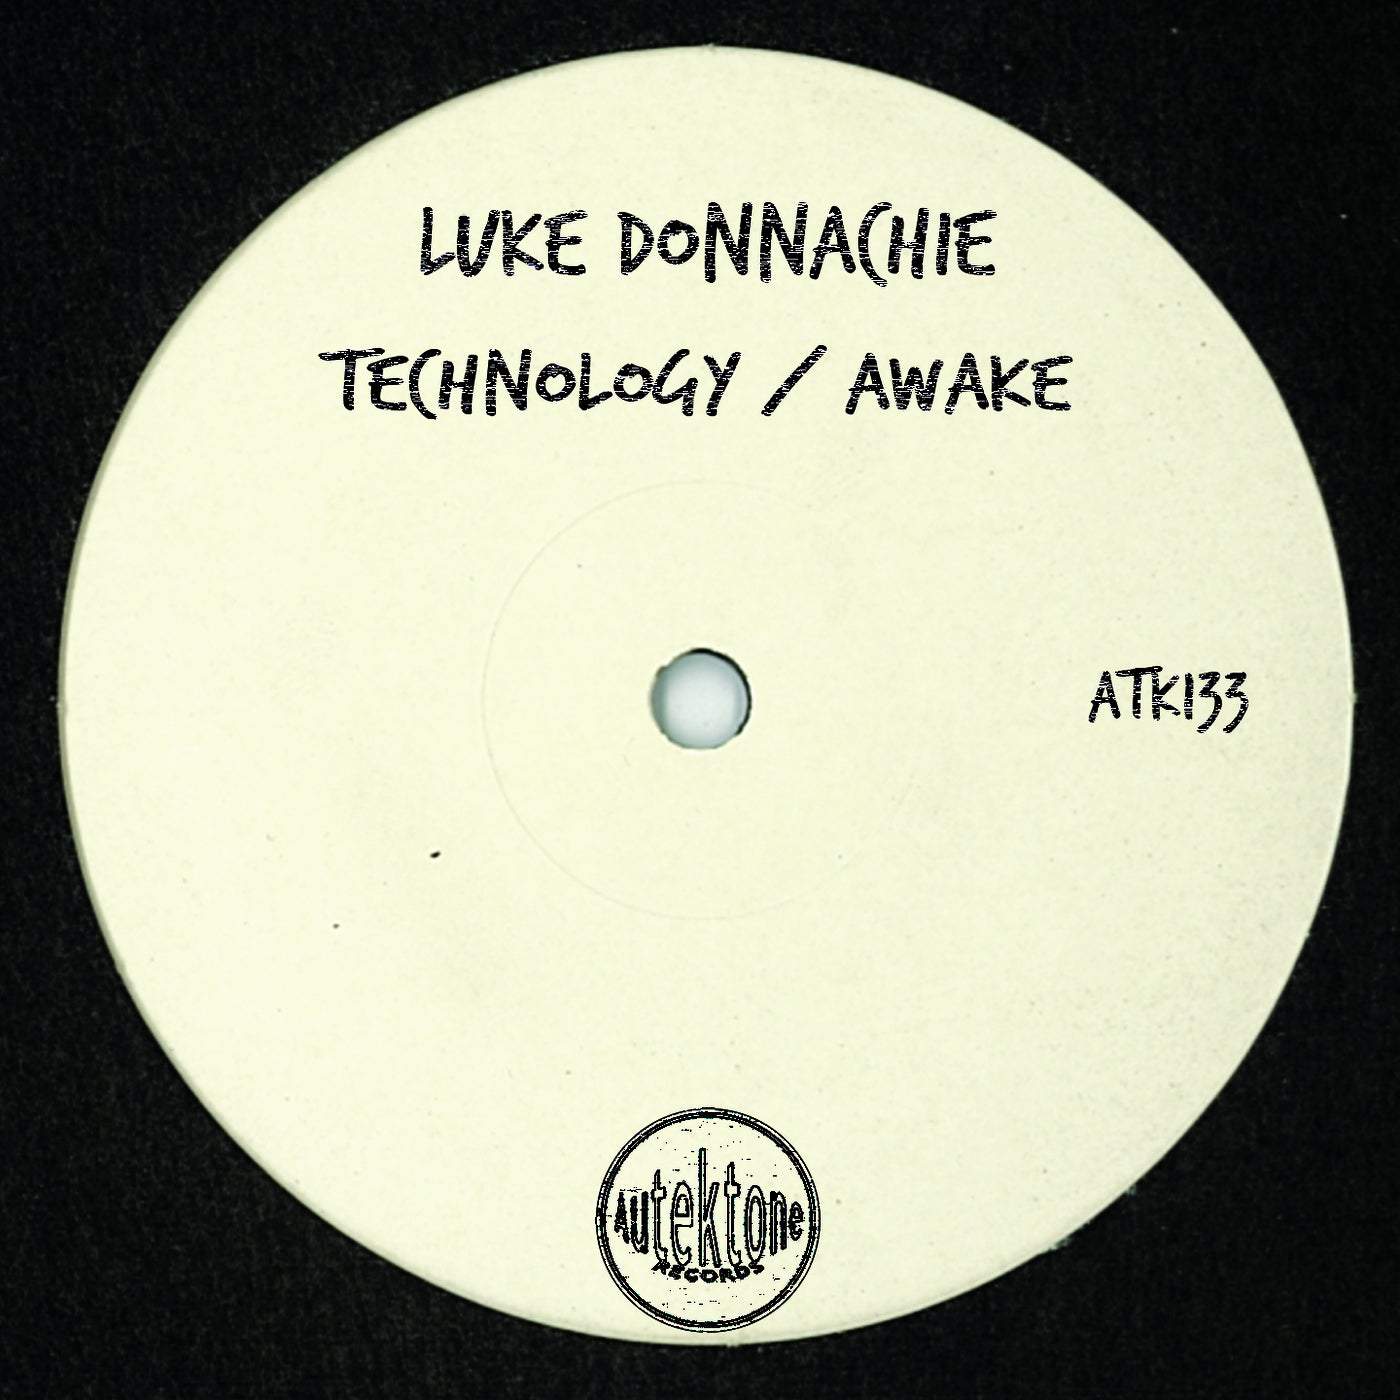 image cover: Luke Donnachie - Technology / Awake / ATK133